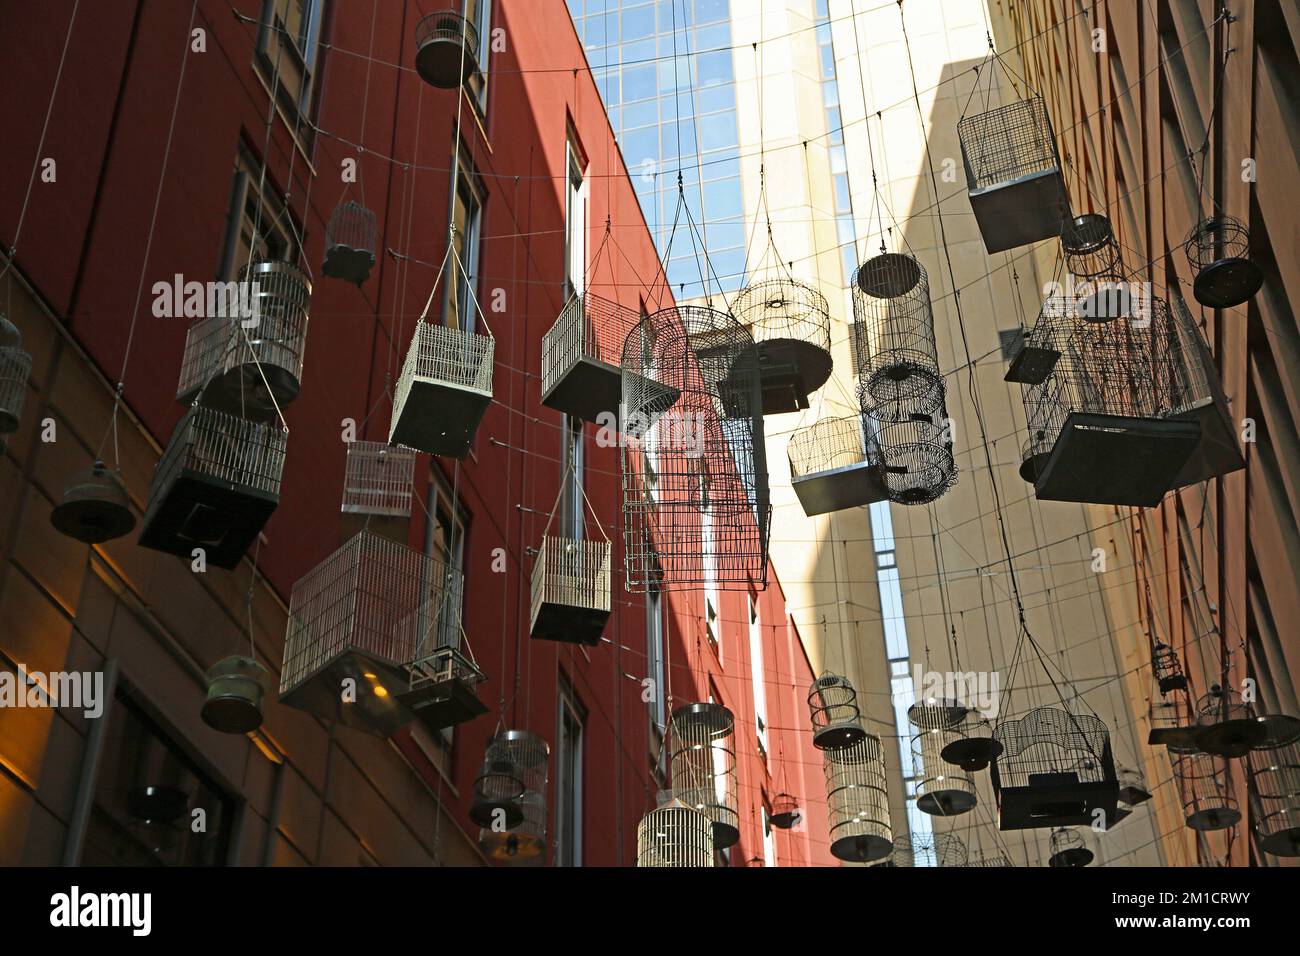 Hanging bird cages - Forgotten songs - Sydney, Australia Stock Photo